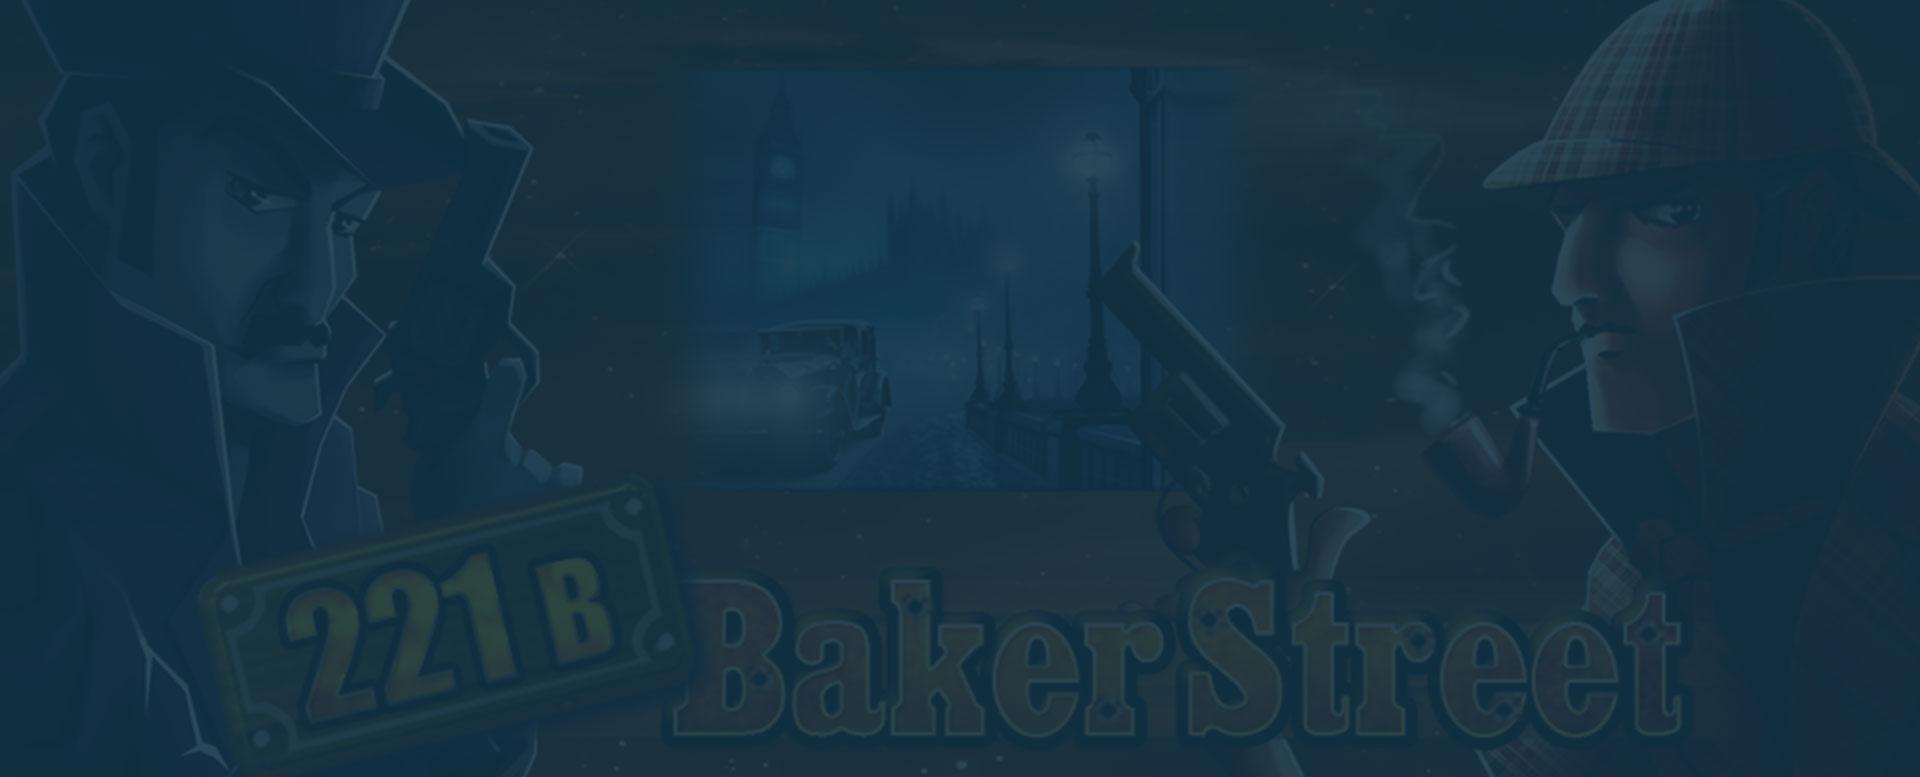 221b Baker Street demo play